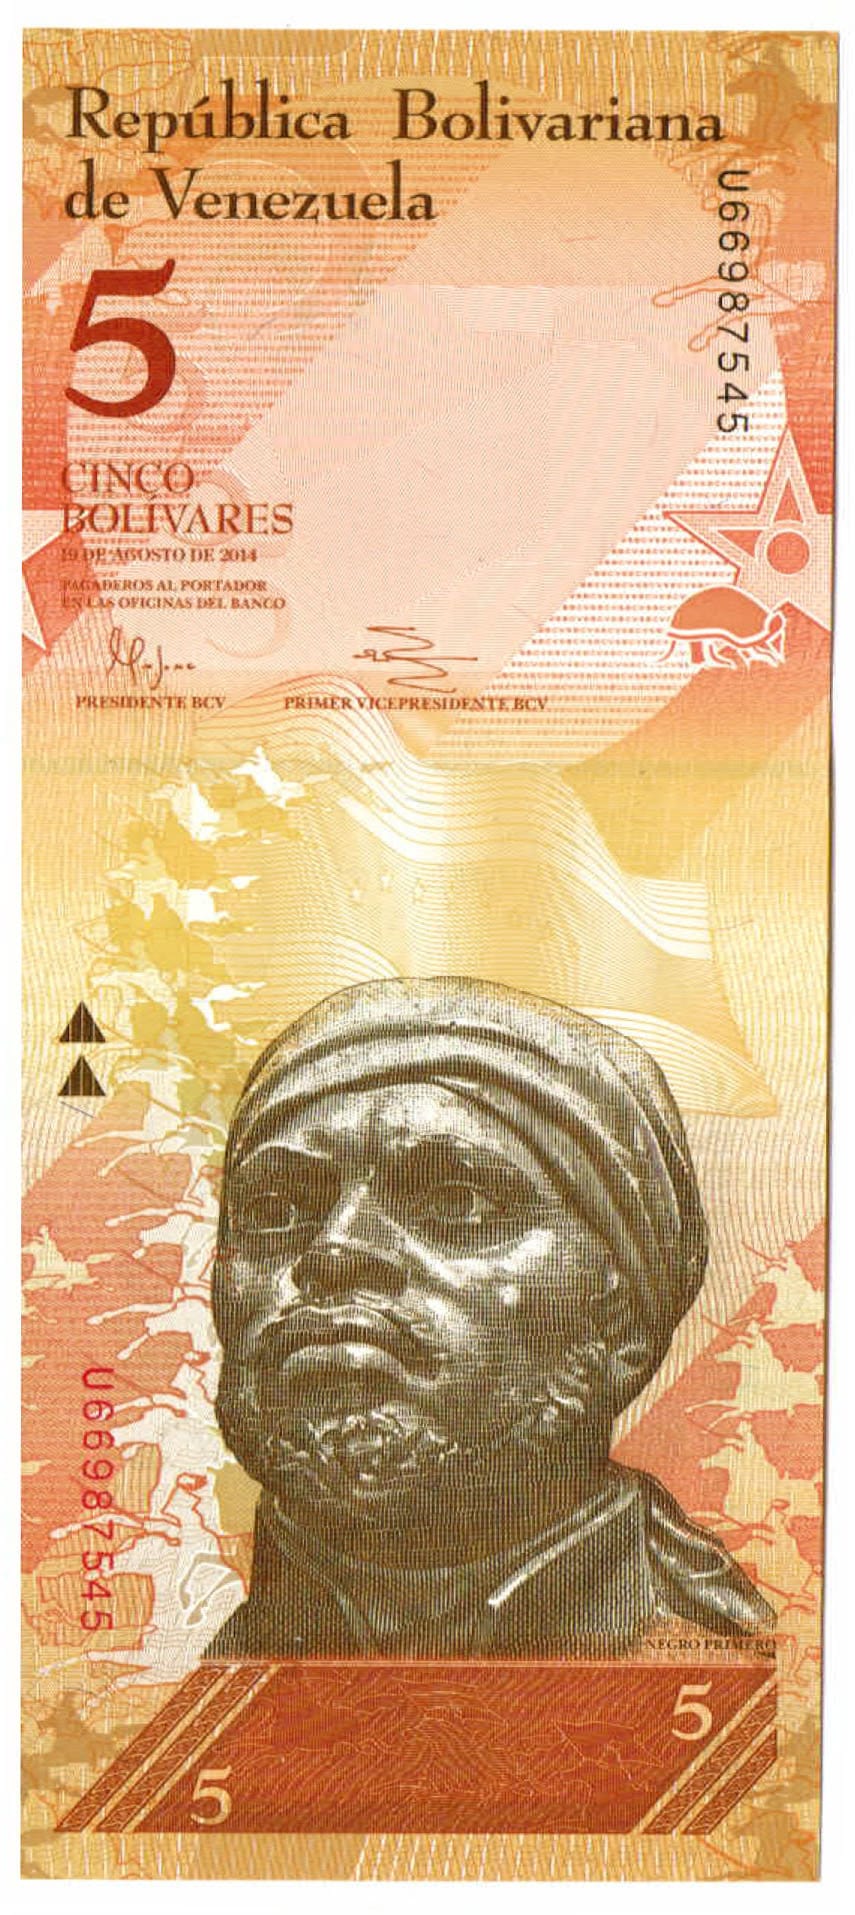 Giant Armadillo 5 Bolivares Venezuela Authentic Banknote for Craft Making